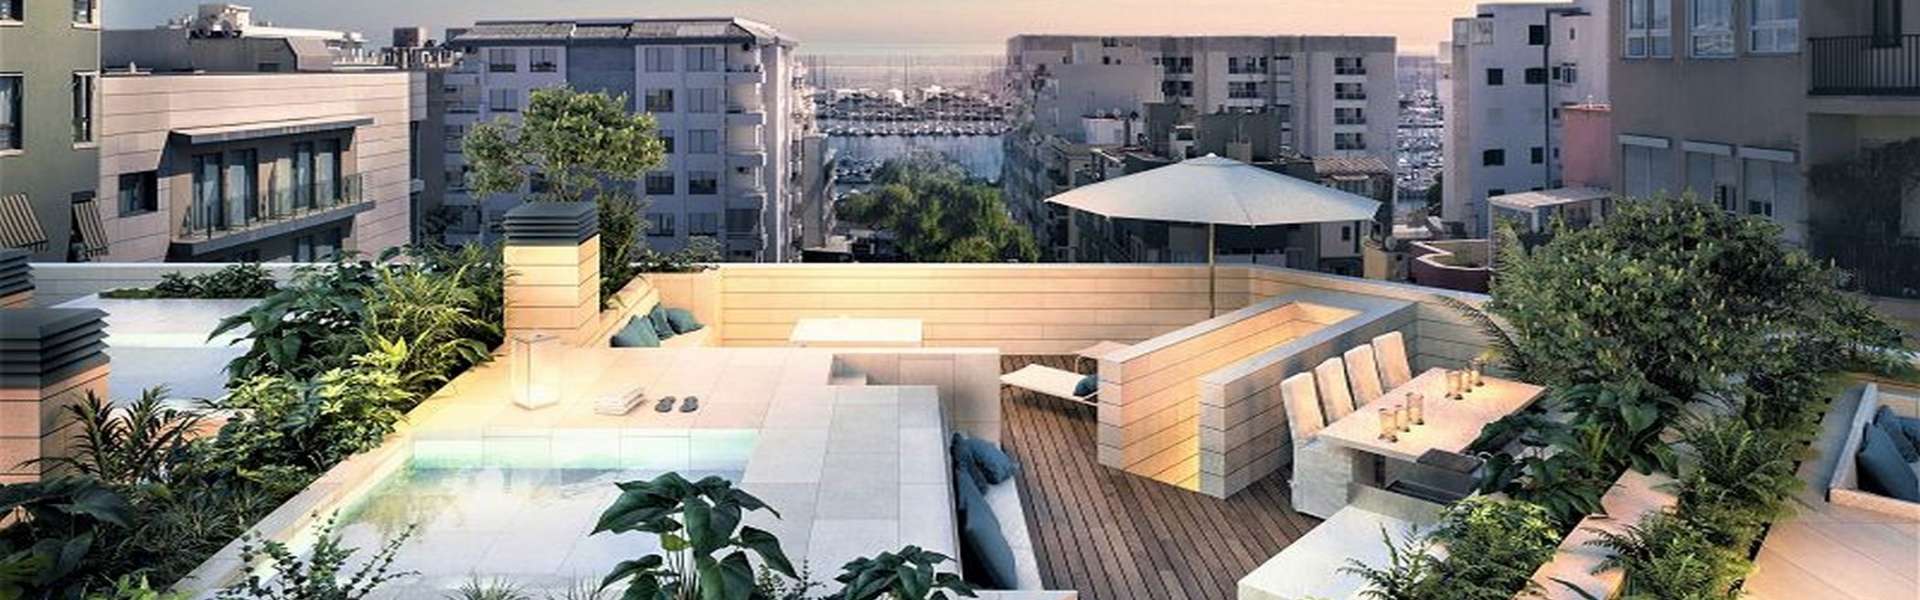 Palma/Santa Catalina - Newly built apartments in top location